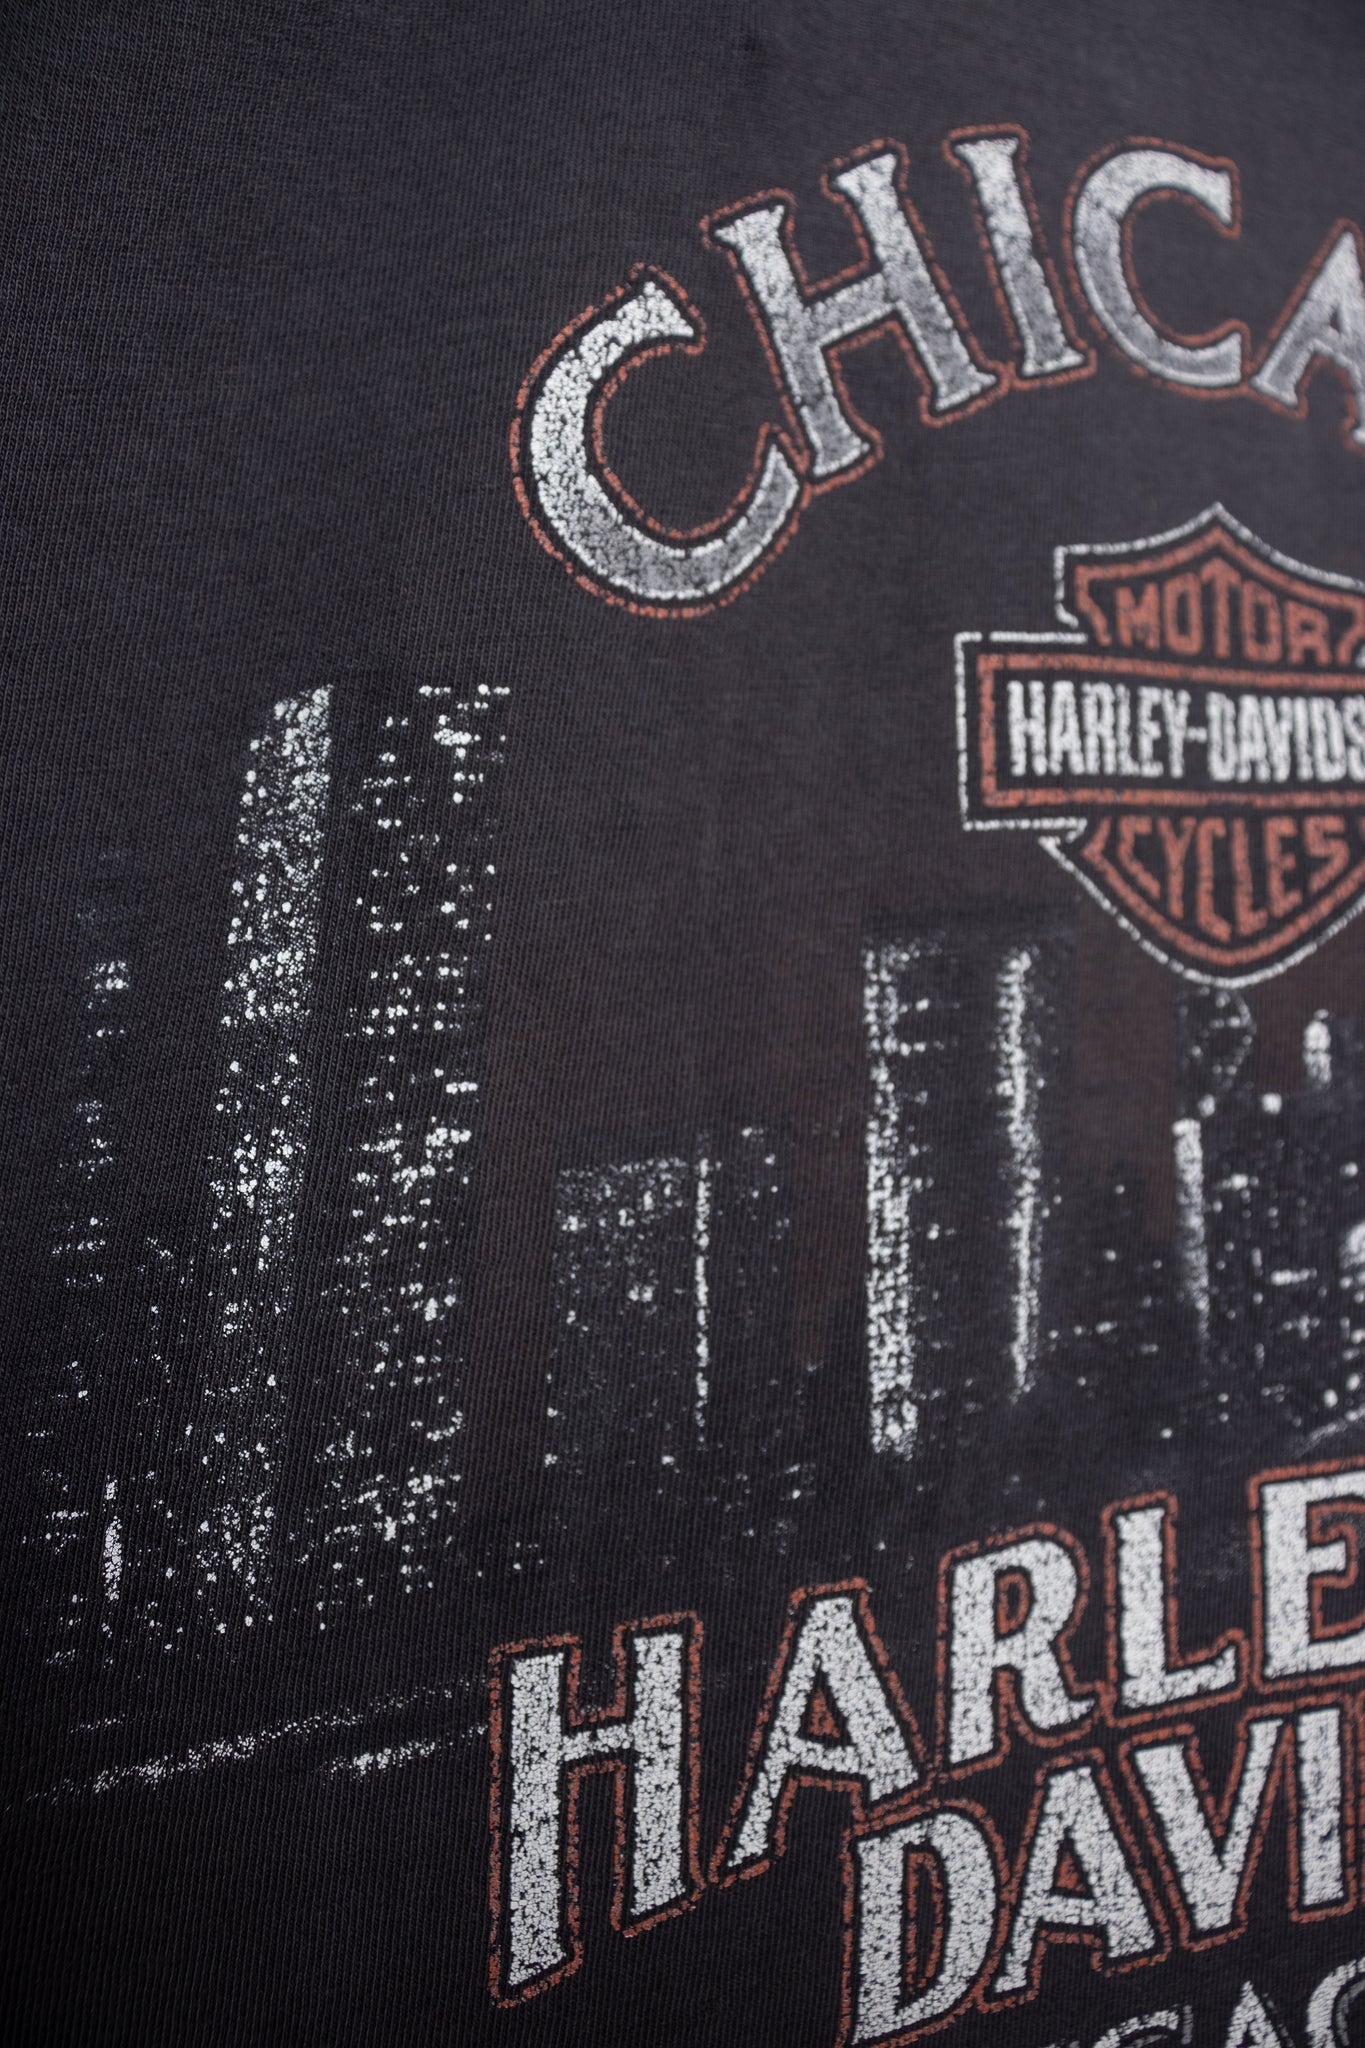 Chicago Harley Davidson